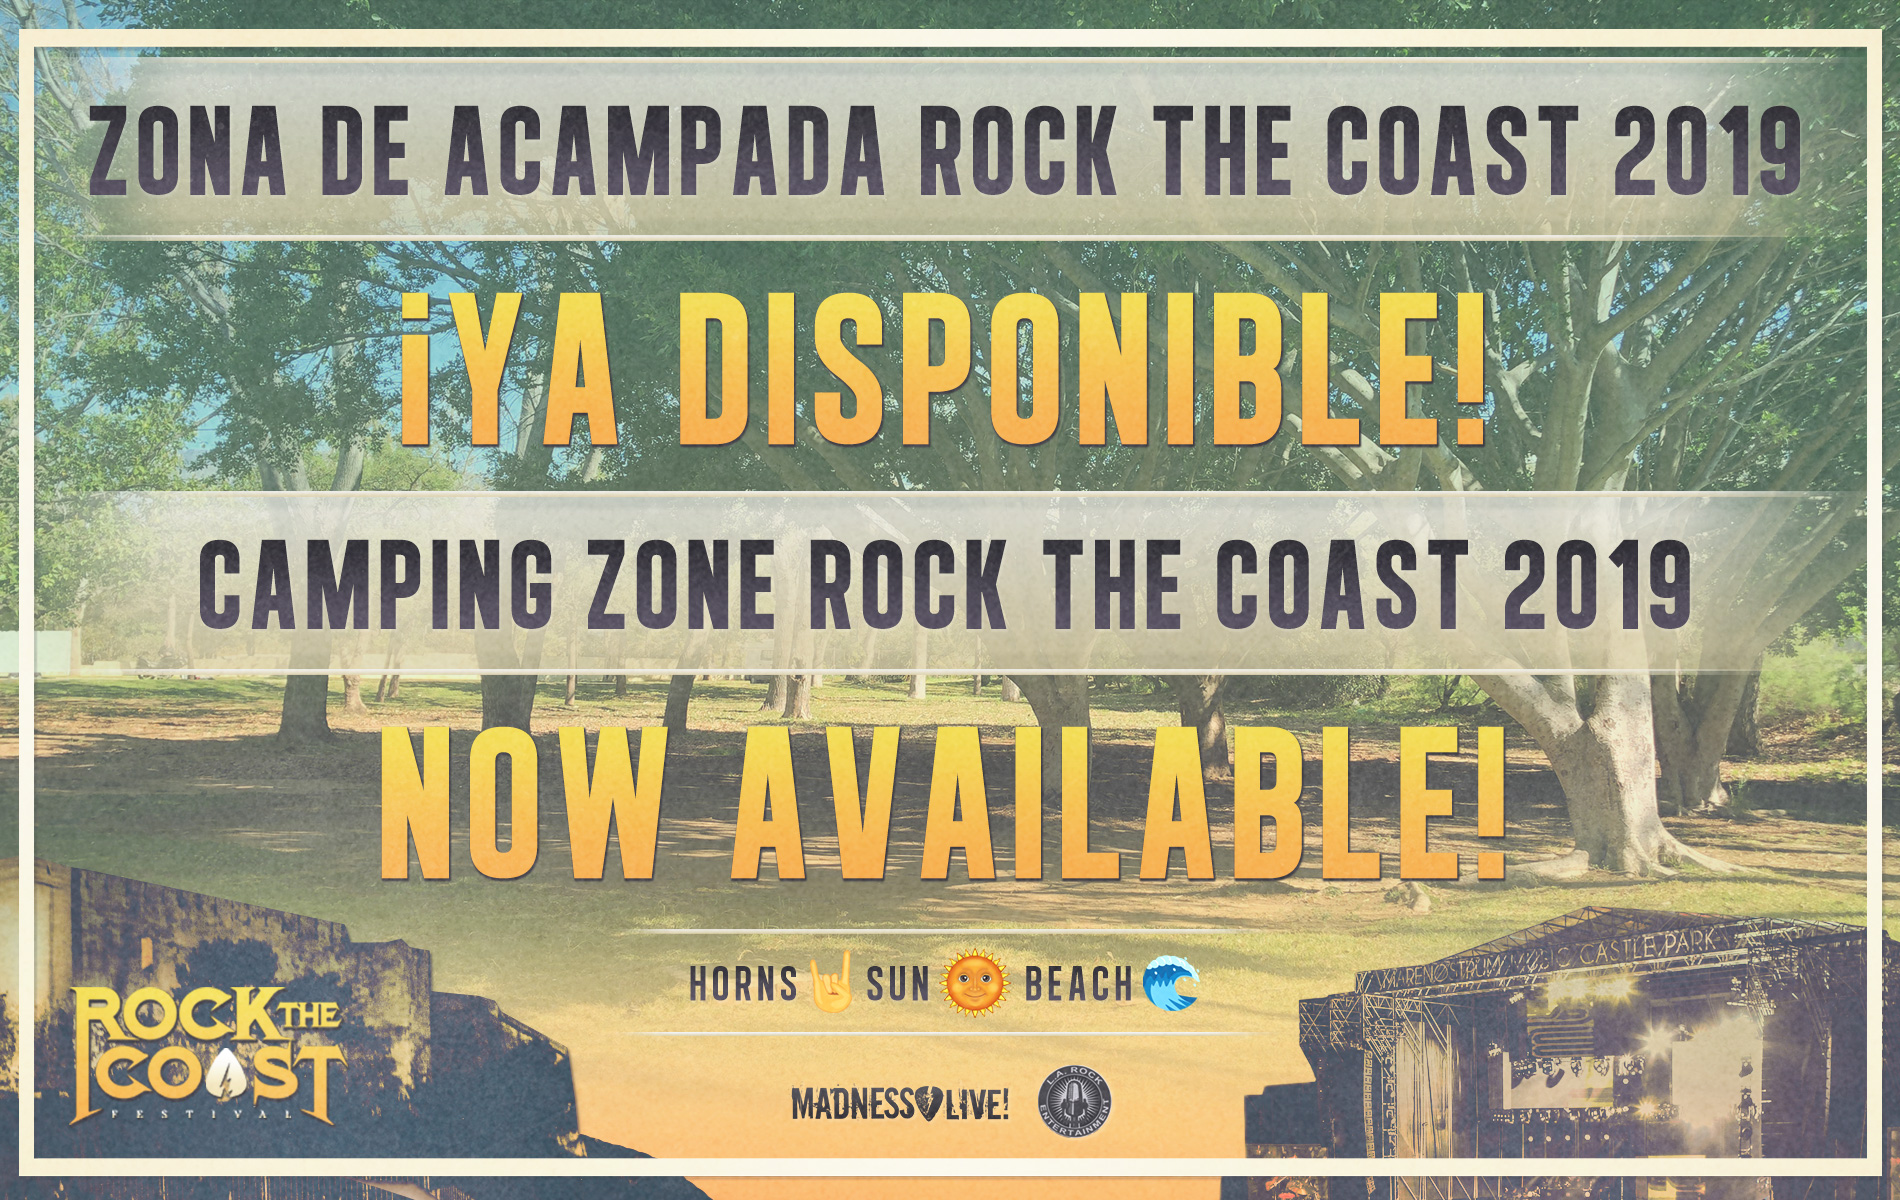 rock the coast - zona de acampada